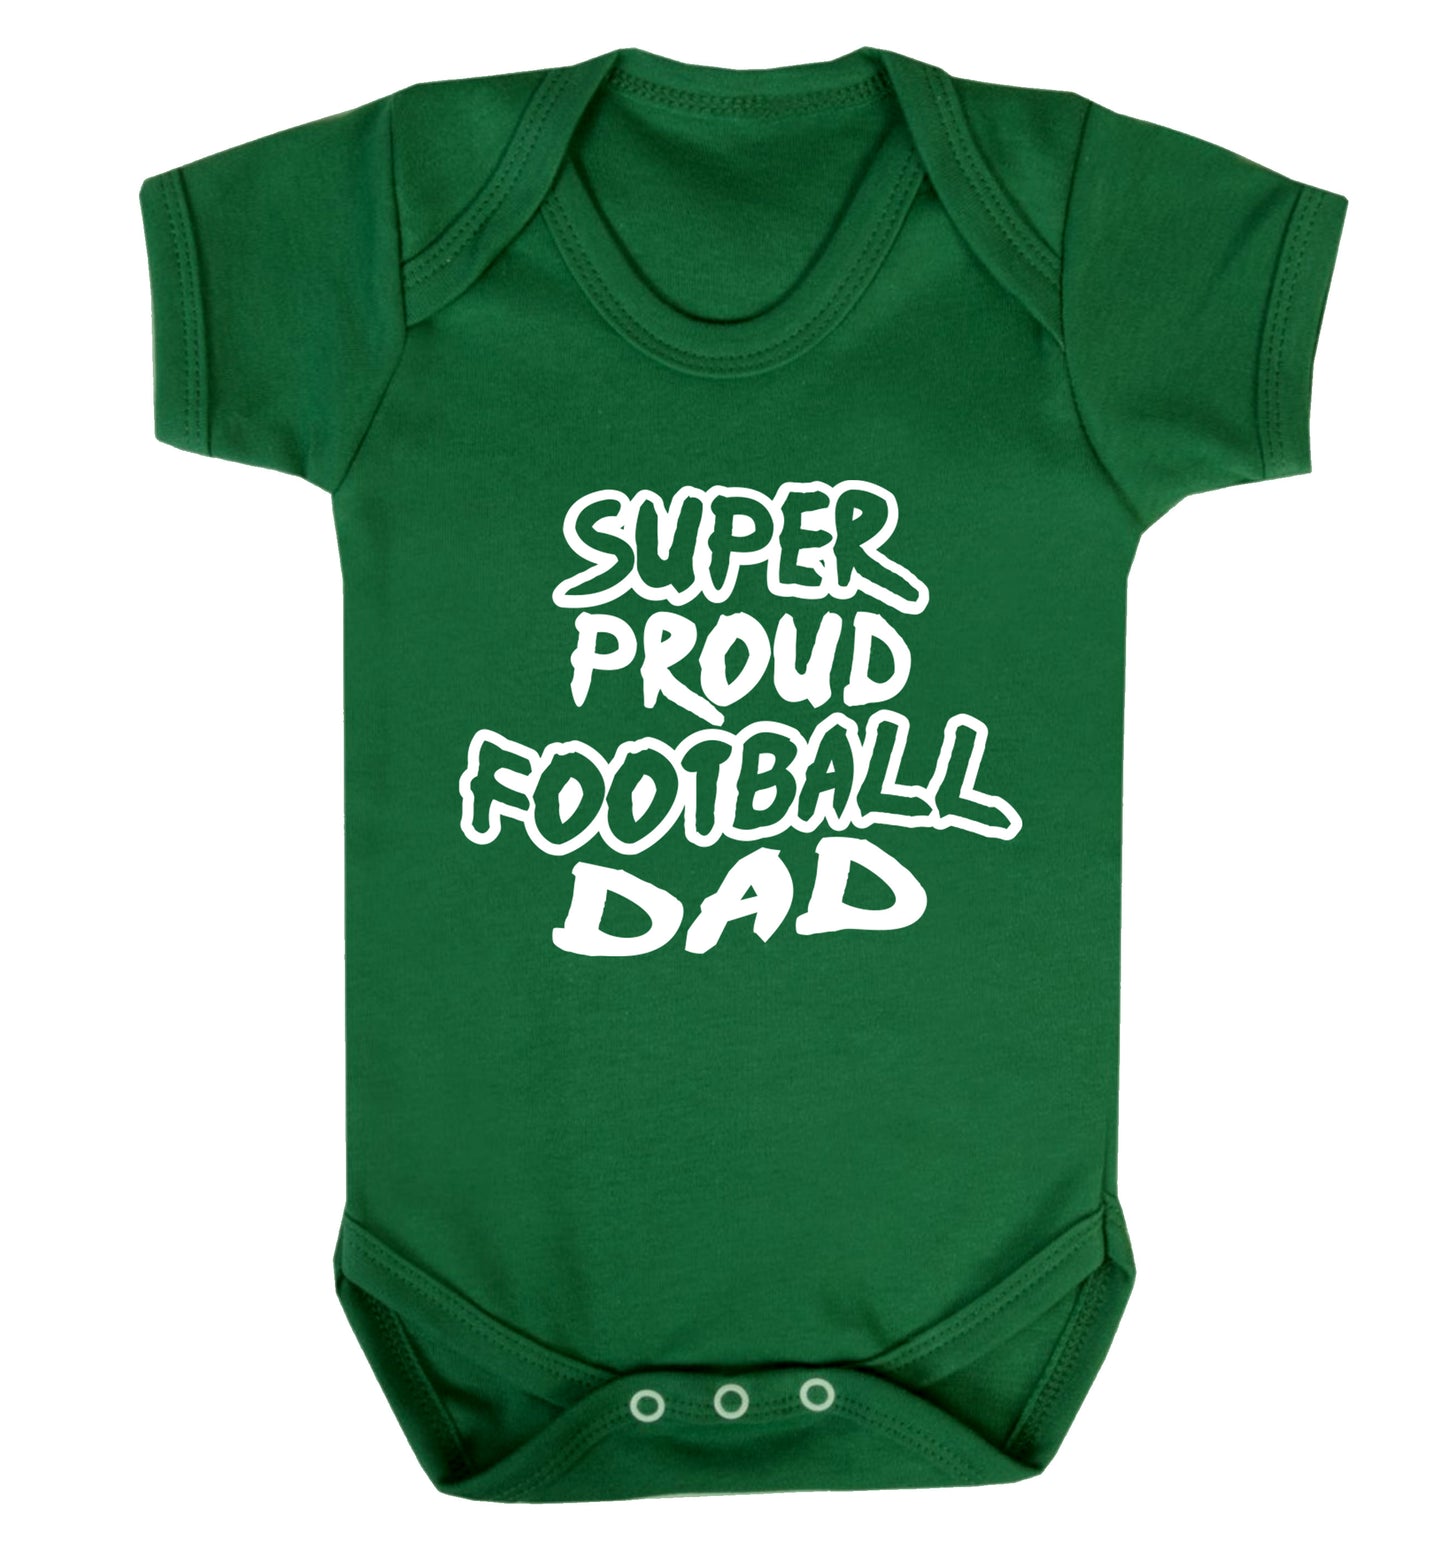 Super proud football dad Baby Vest green 18-24 months